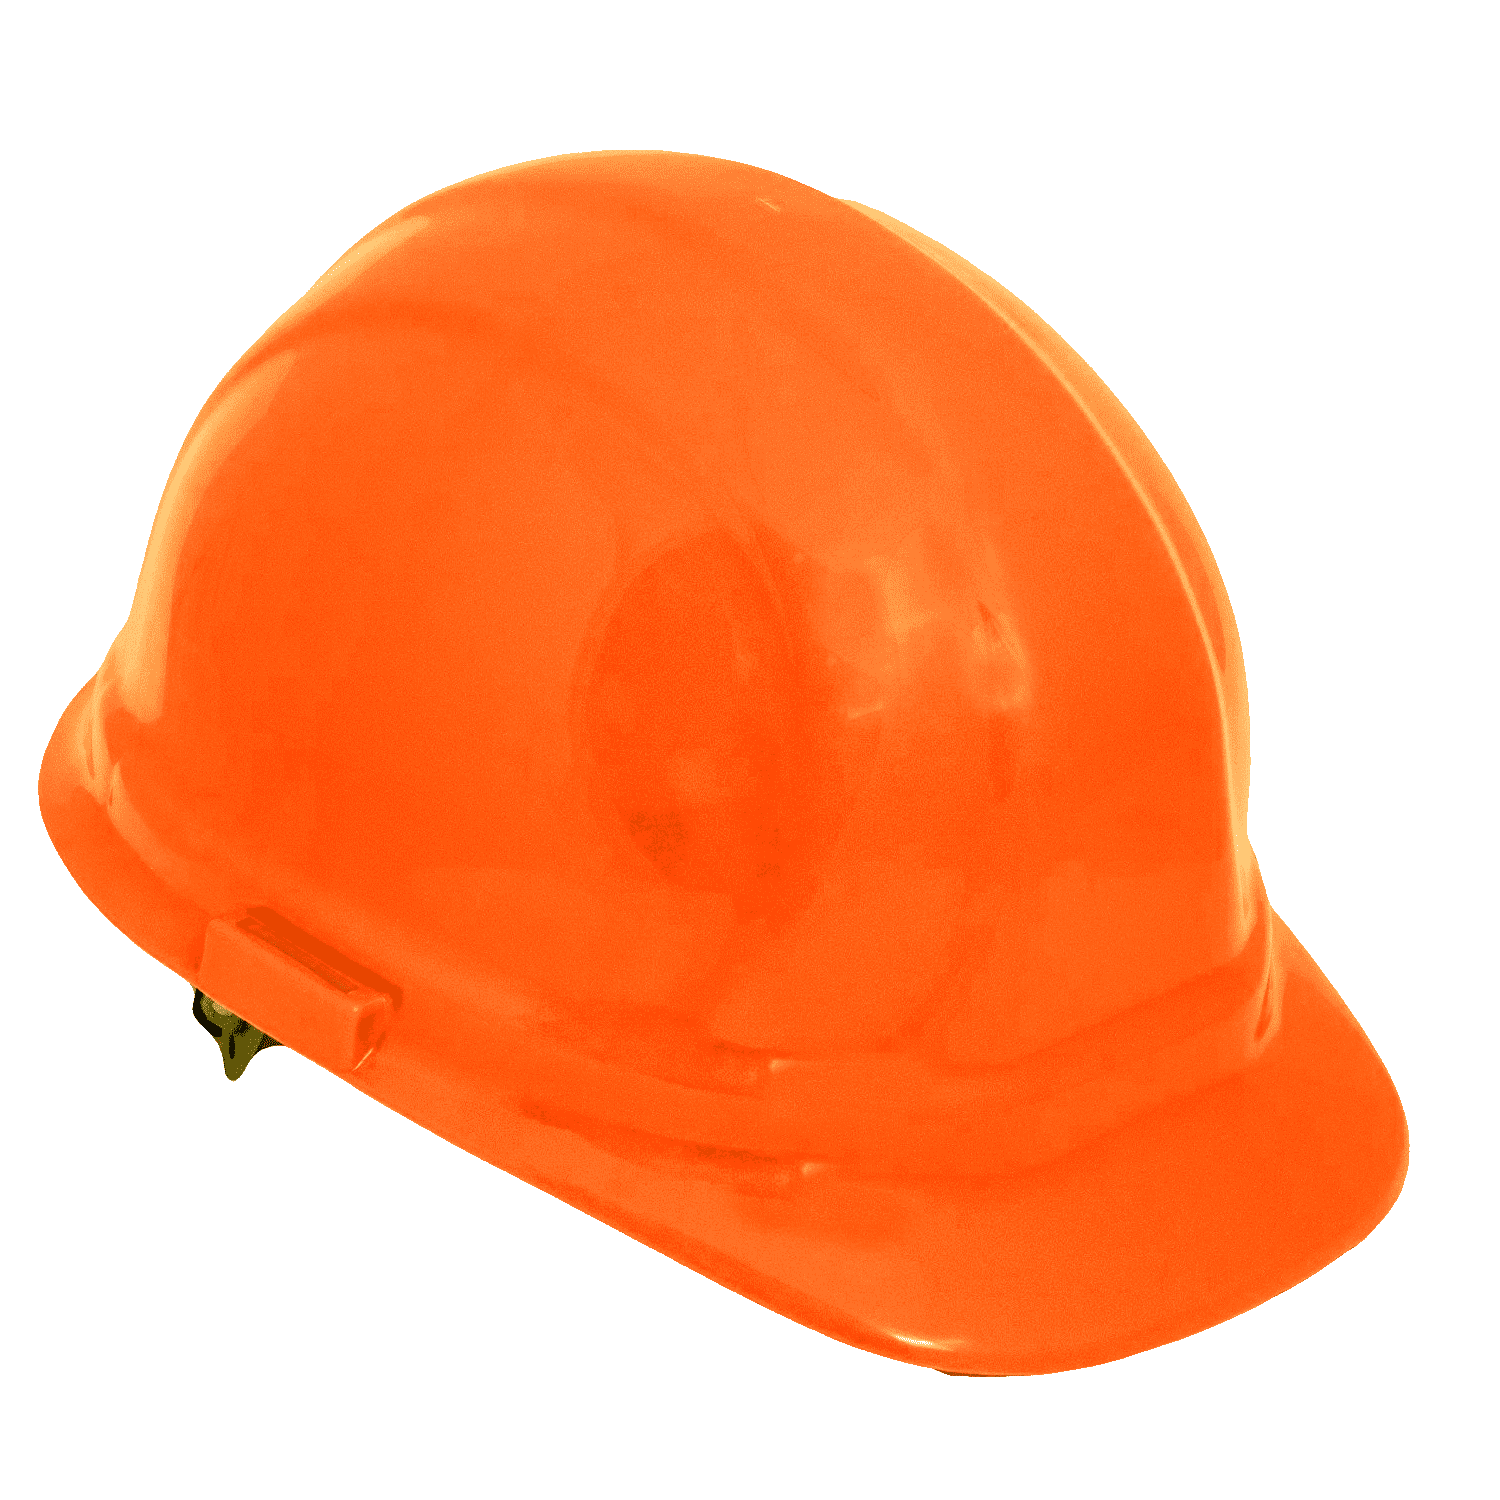 Hi-Vis Orange